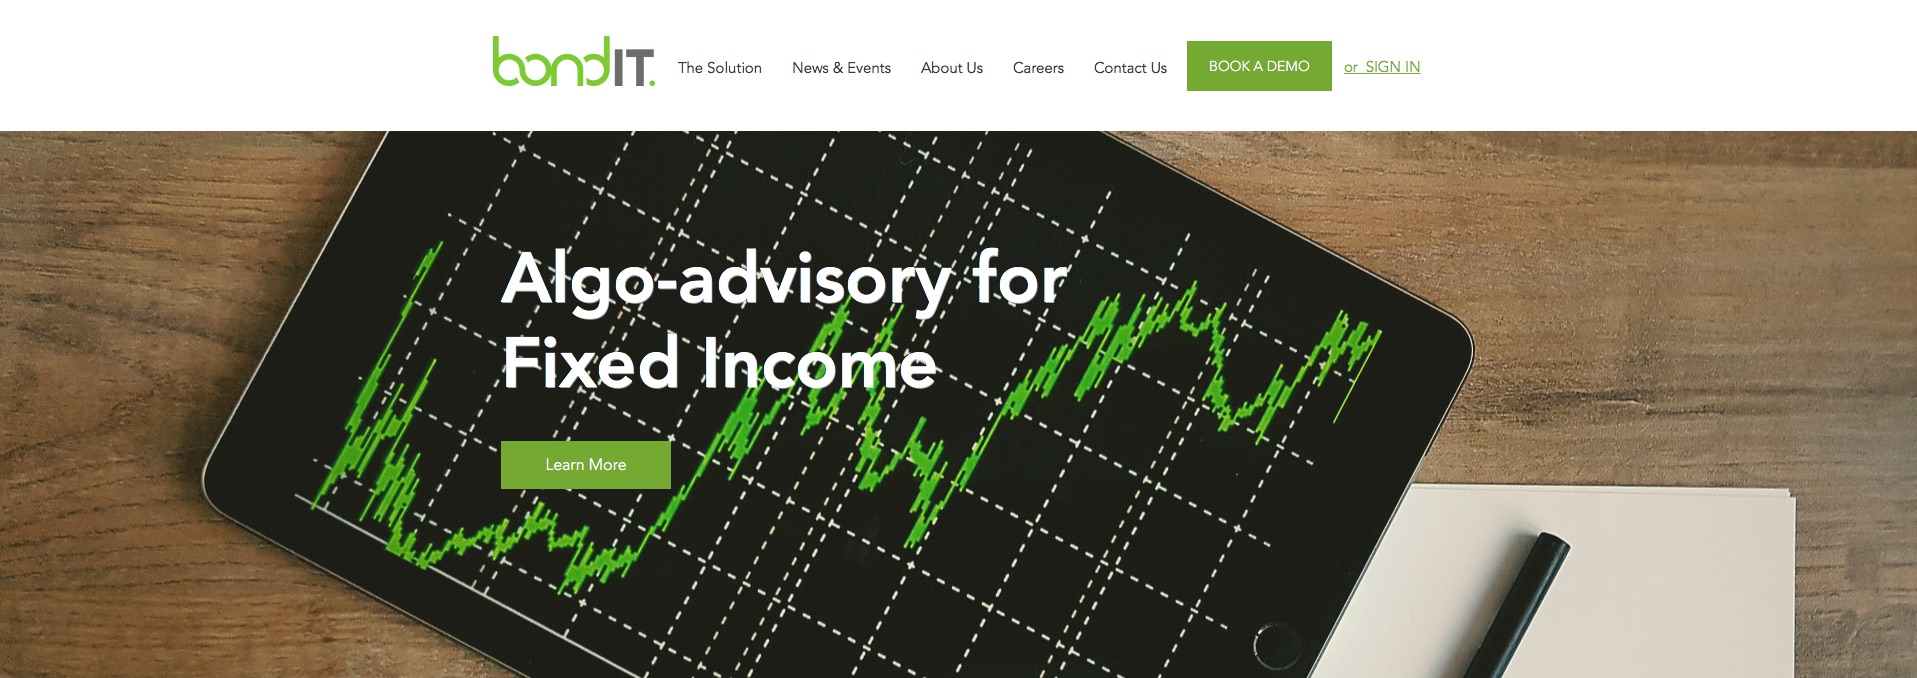 BondIT Raises $4 Million in New Funding, Adding to Series B